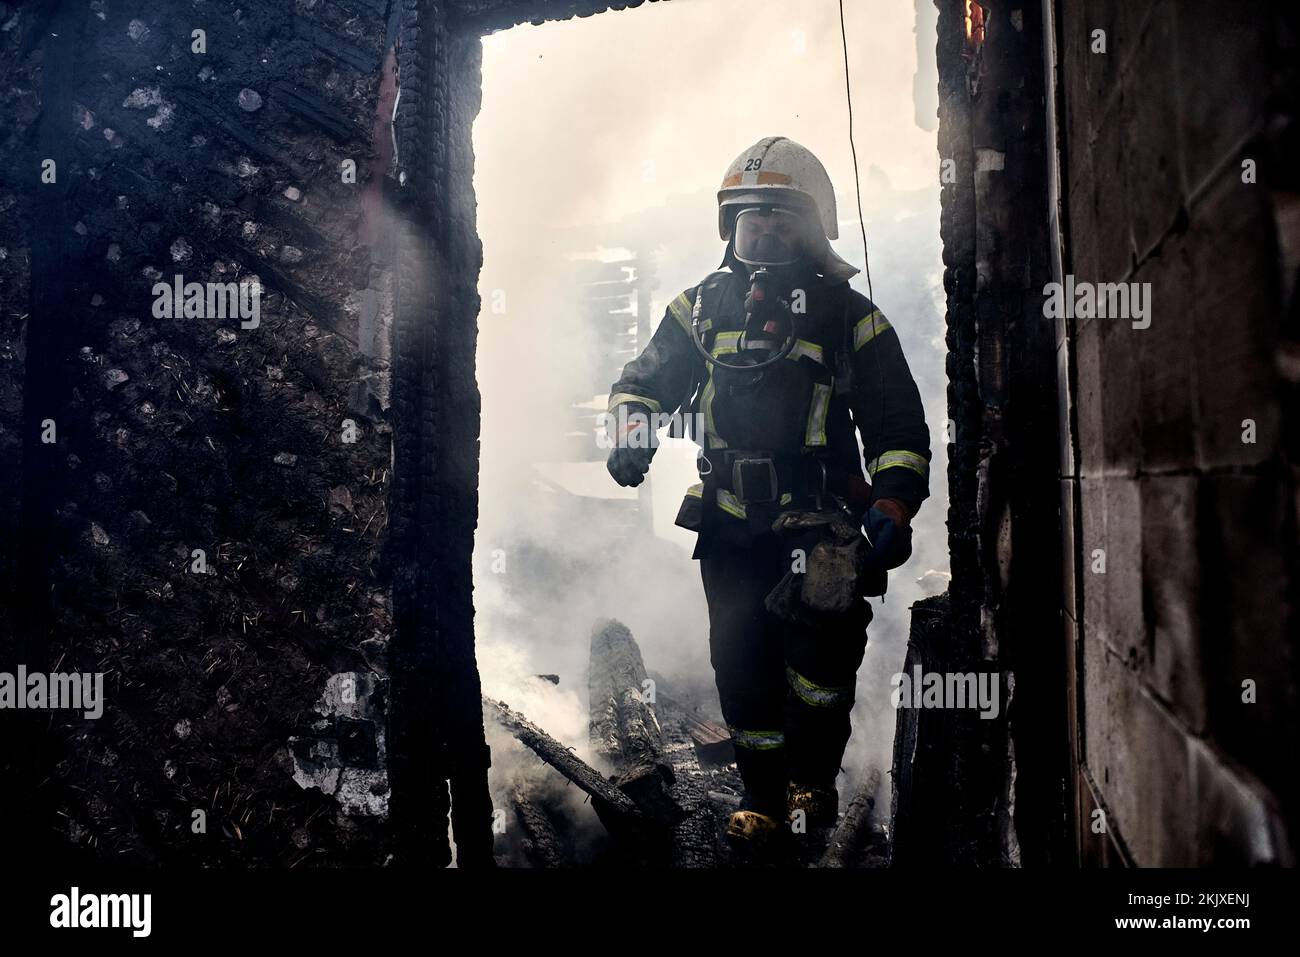 Antonin Burat / Le Pictorium -  War in Ukraine: David stands up to Goliath -  23/3/2022  -  Ukraine / Kyiv  -  Firefighters battling a fire in a build Stock Photo